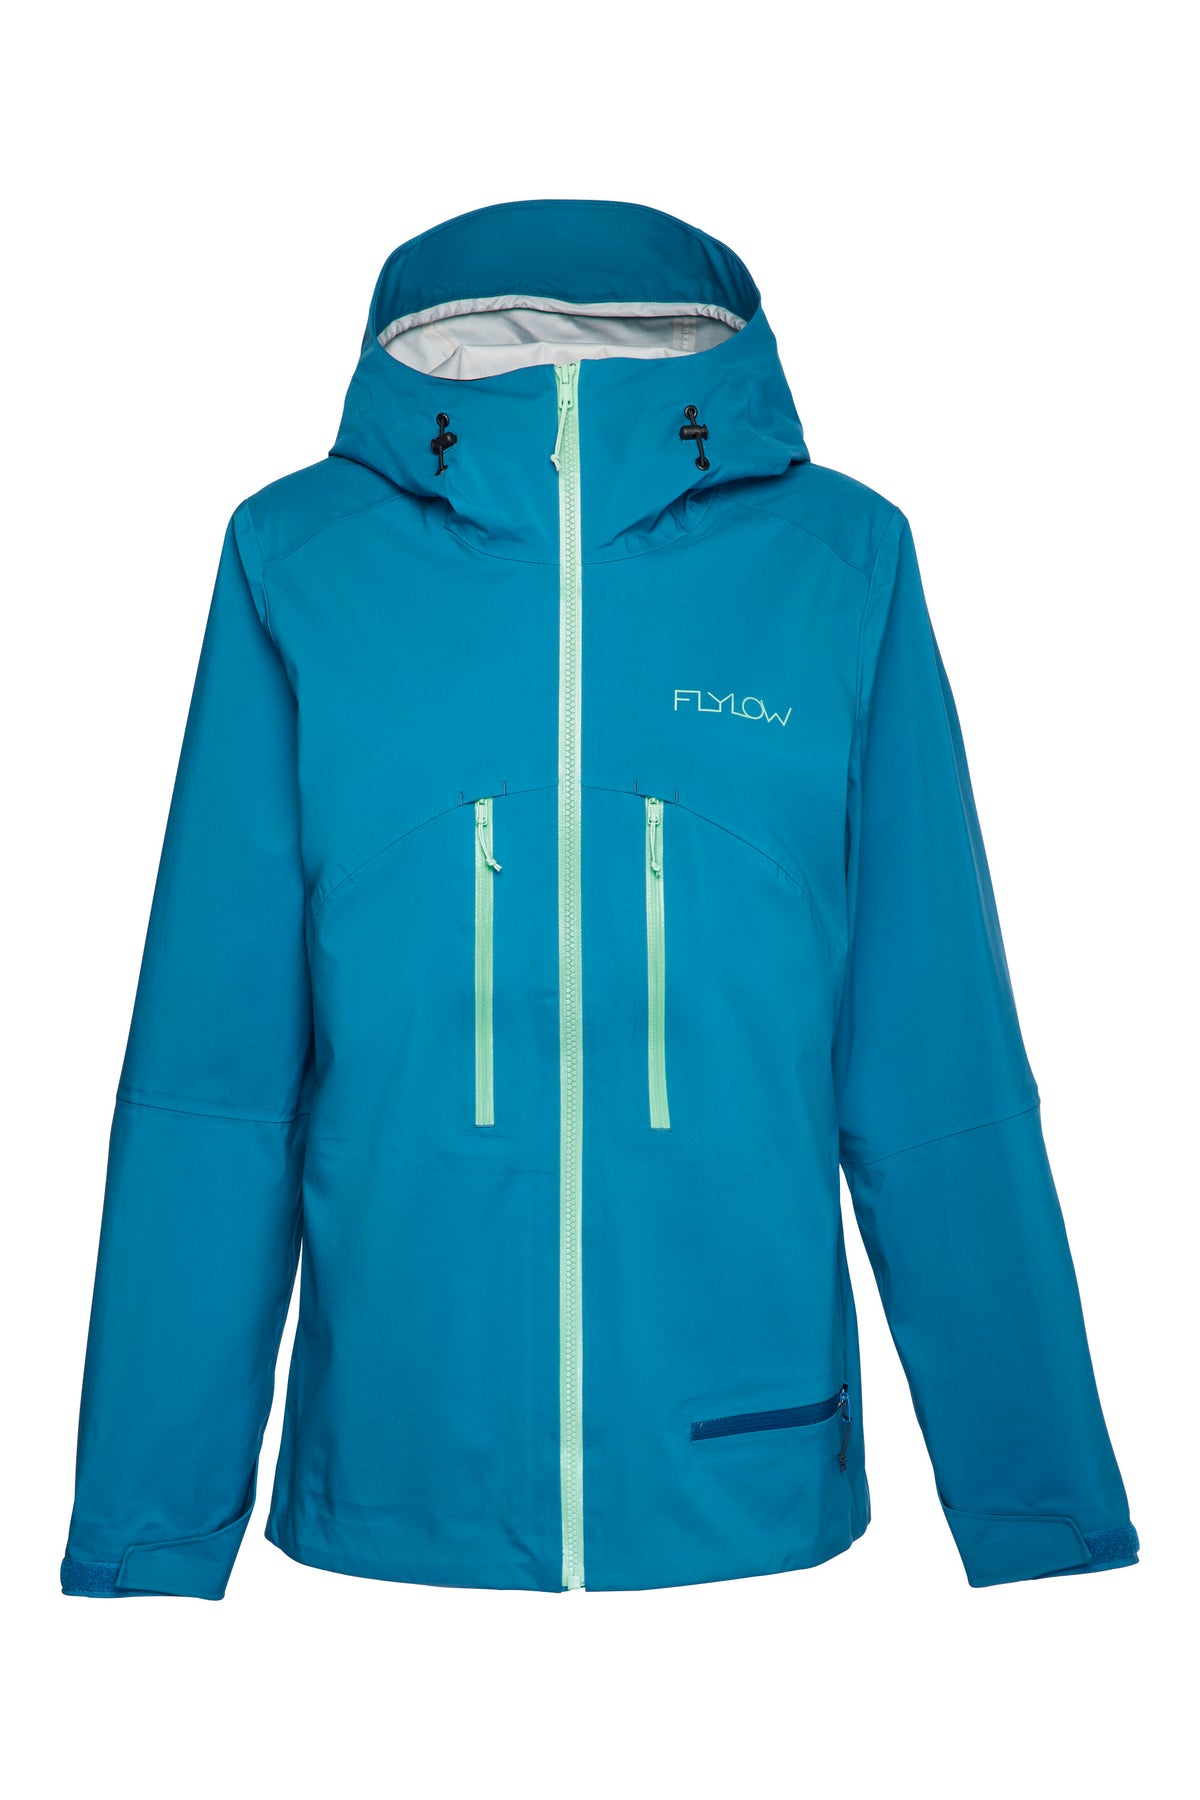 Domino Jacket - Women's Backcountry Ski Jacket | Flylow Gear